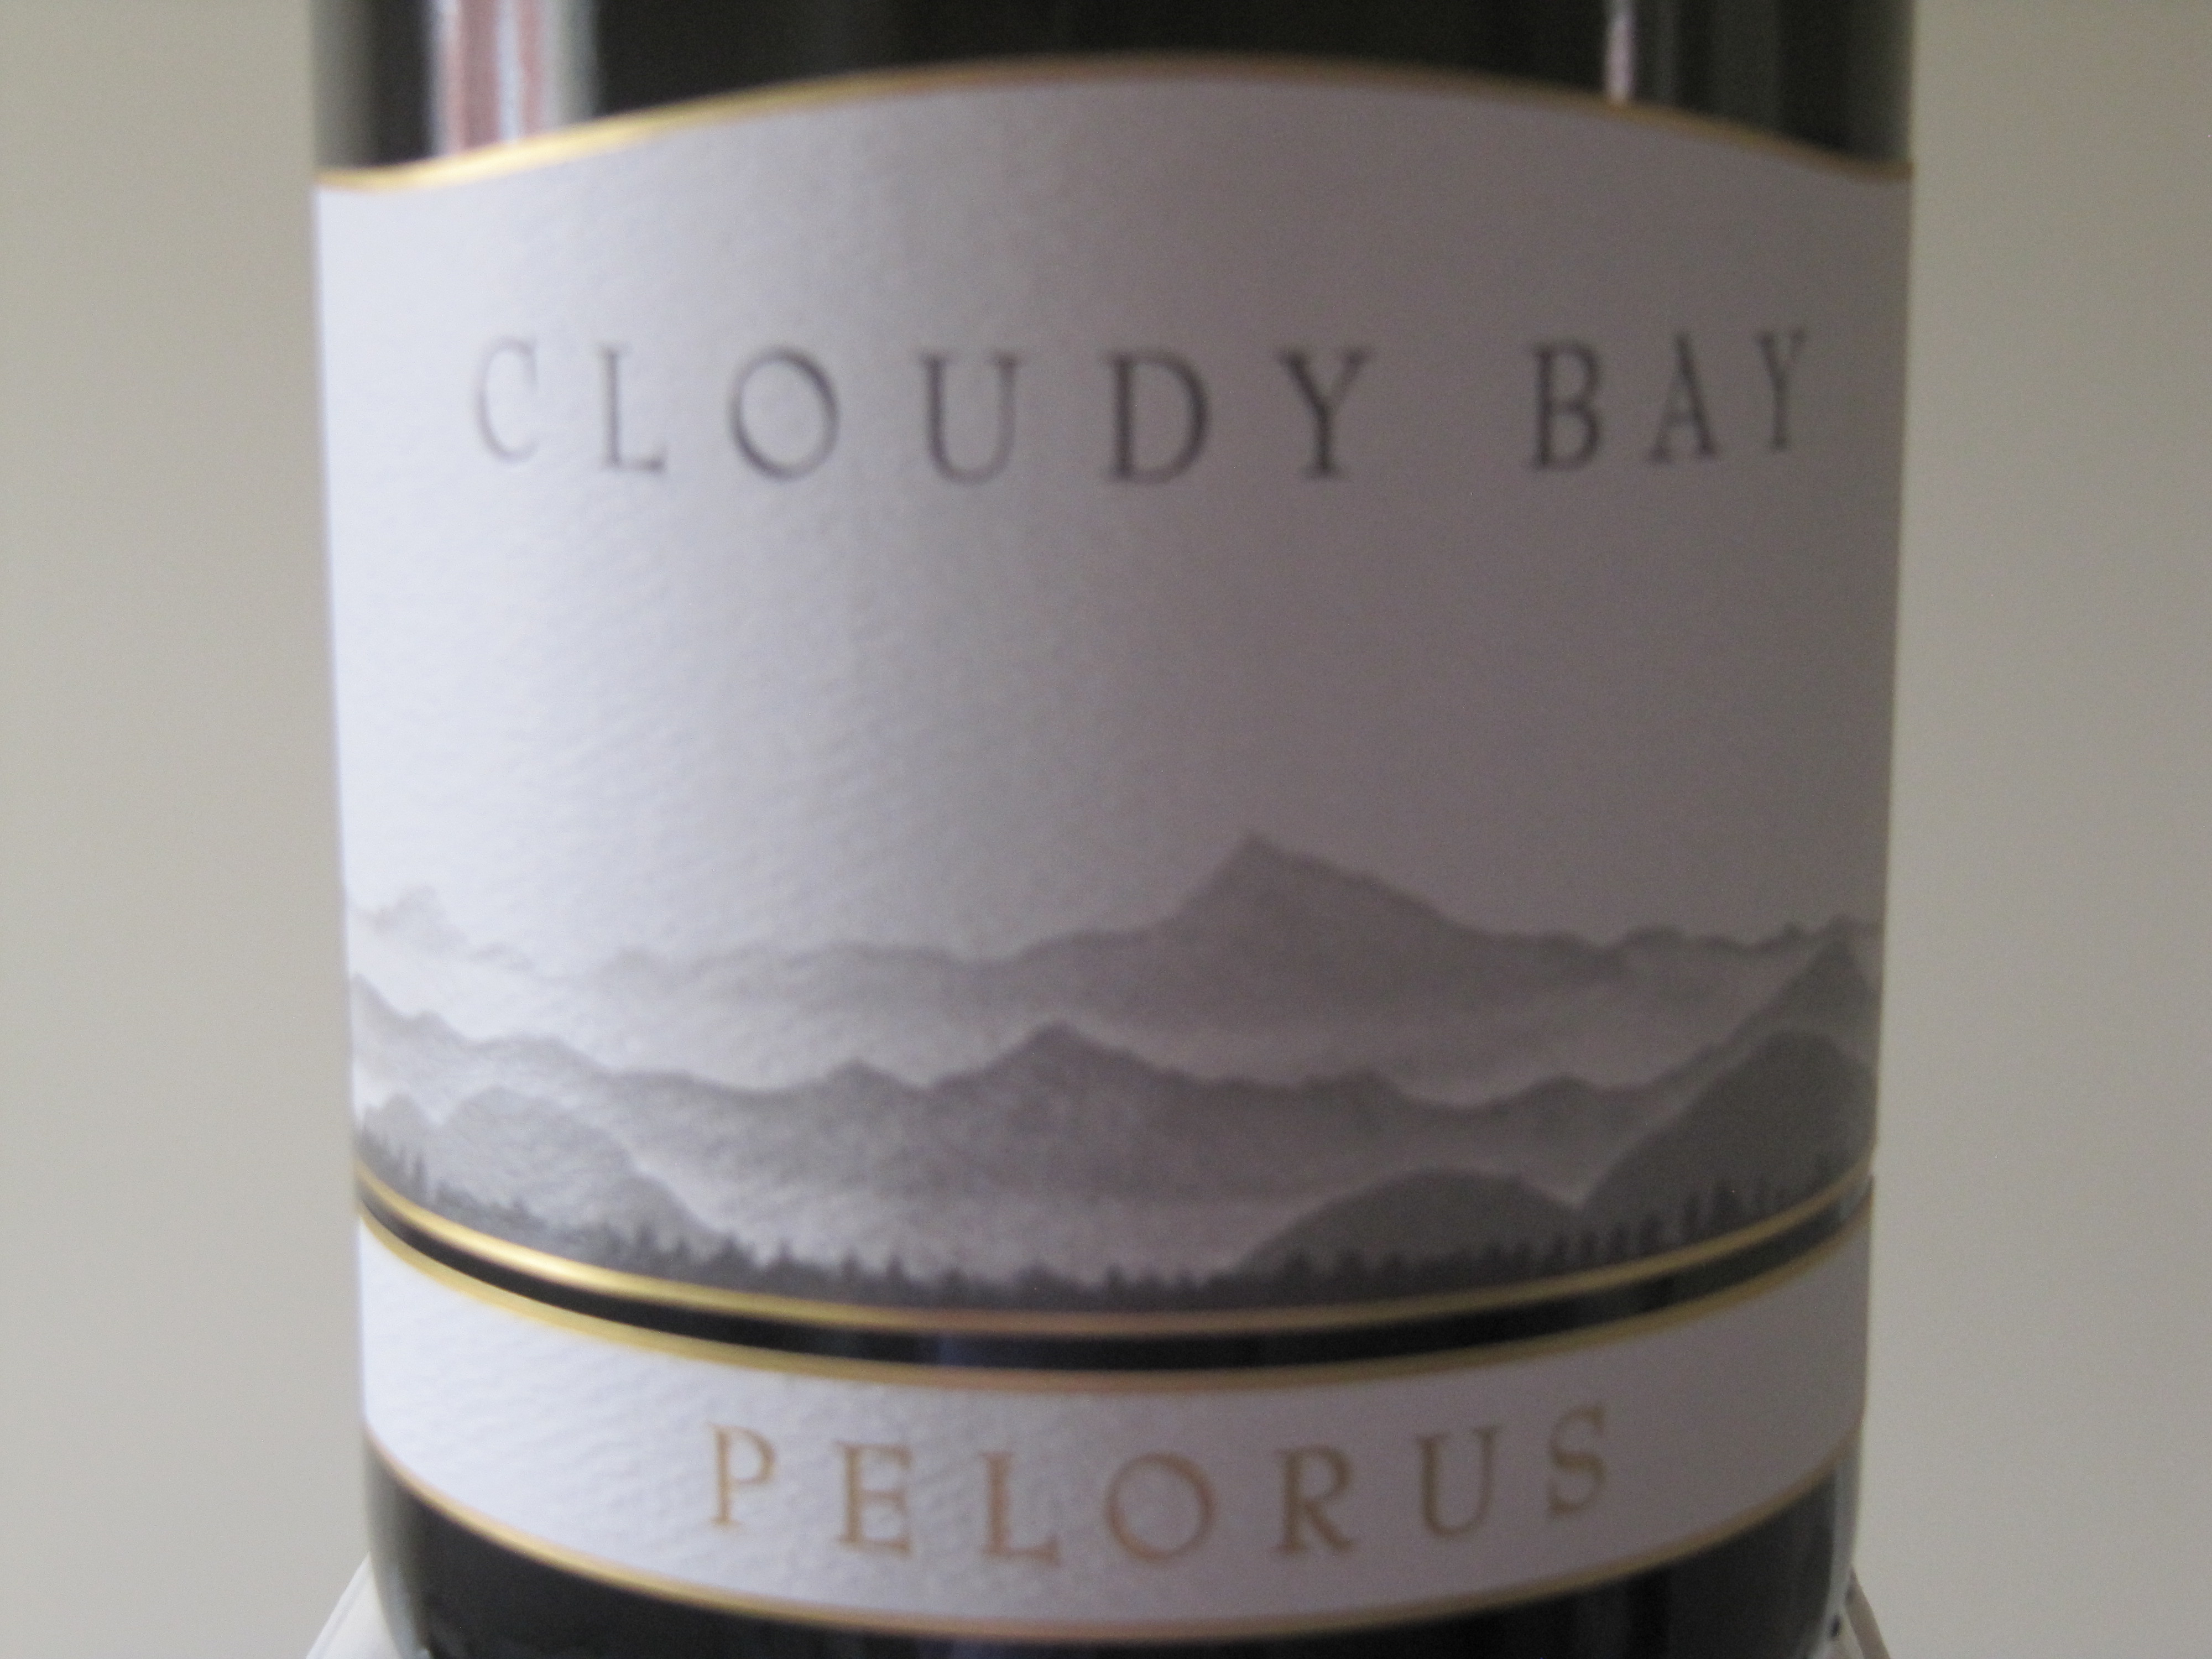 Cloudy Bay, Chardonnay, Marlborough, New Zealand 2015